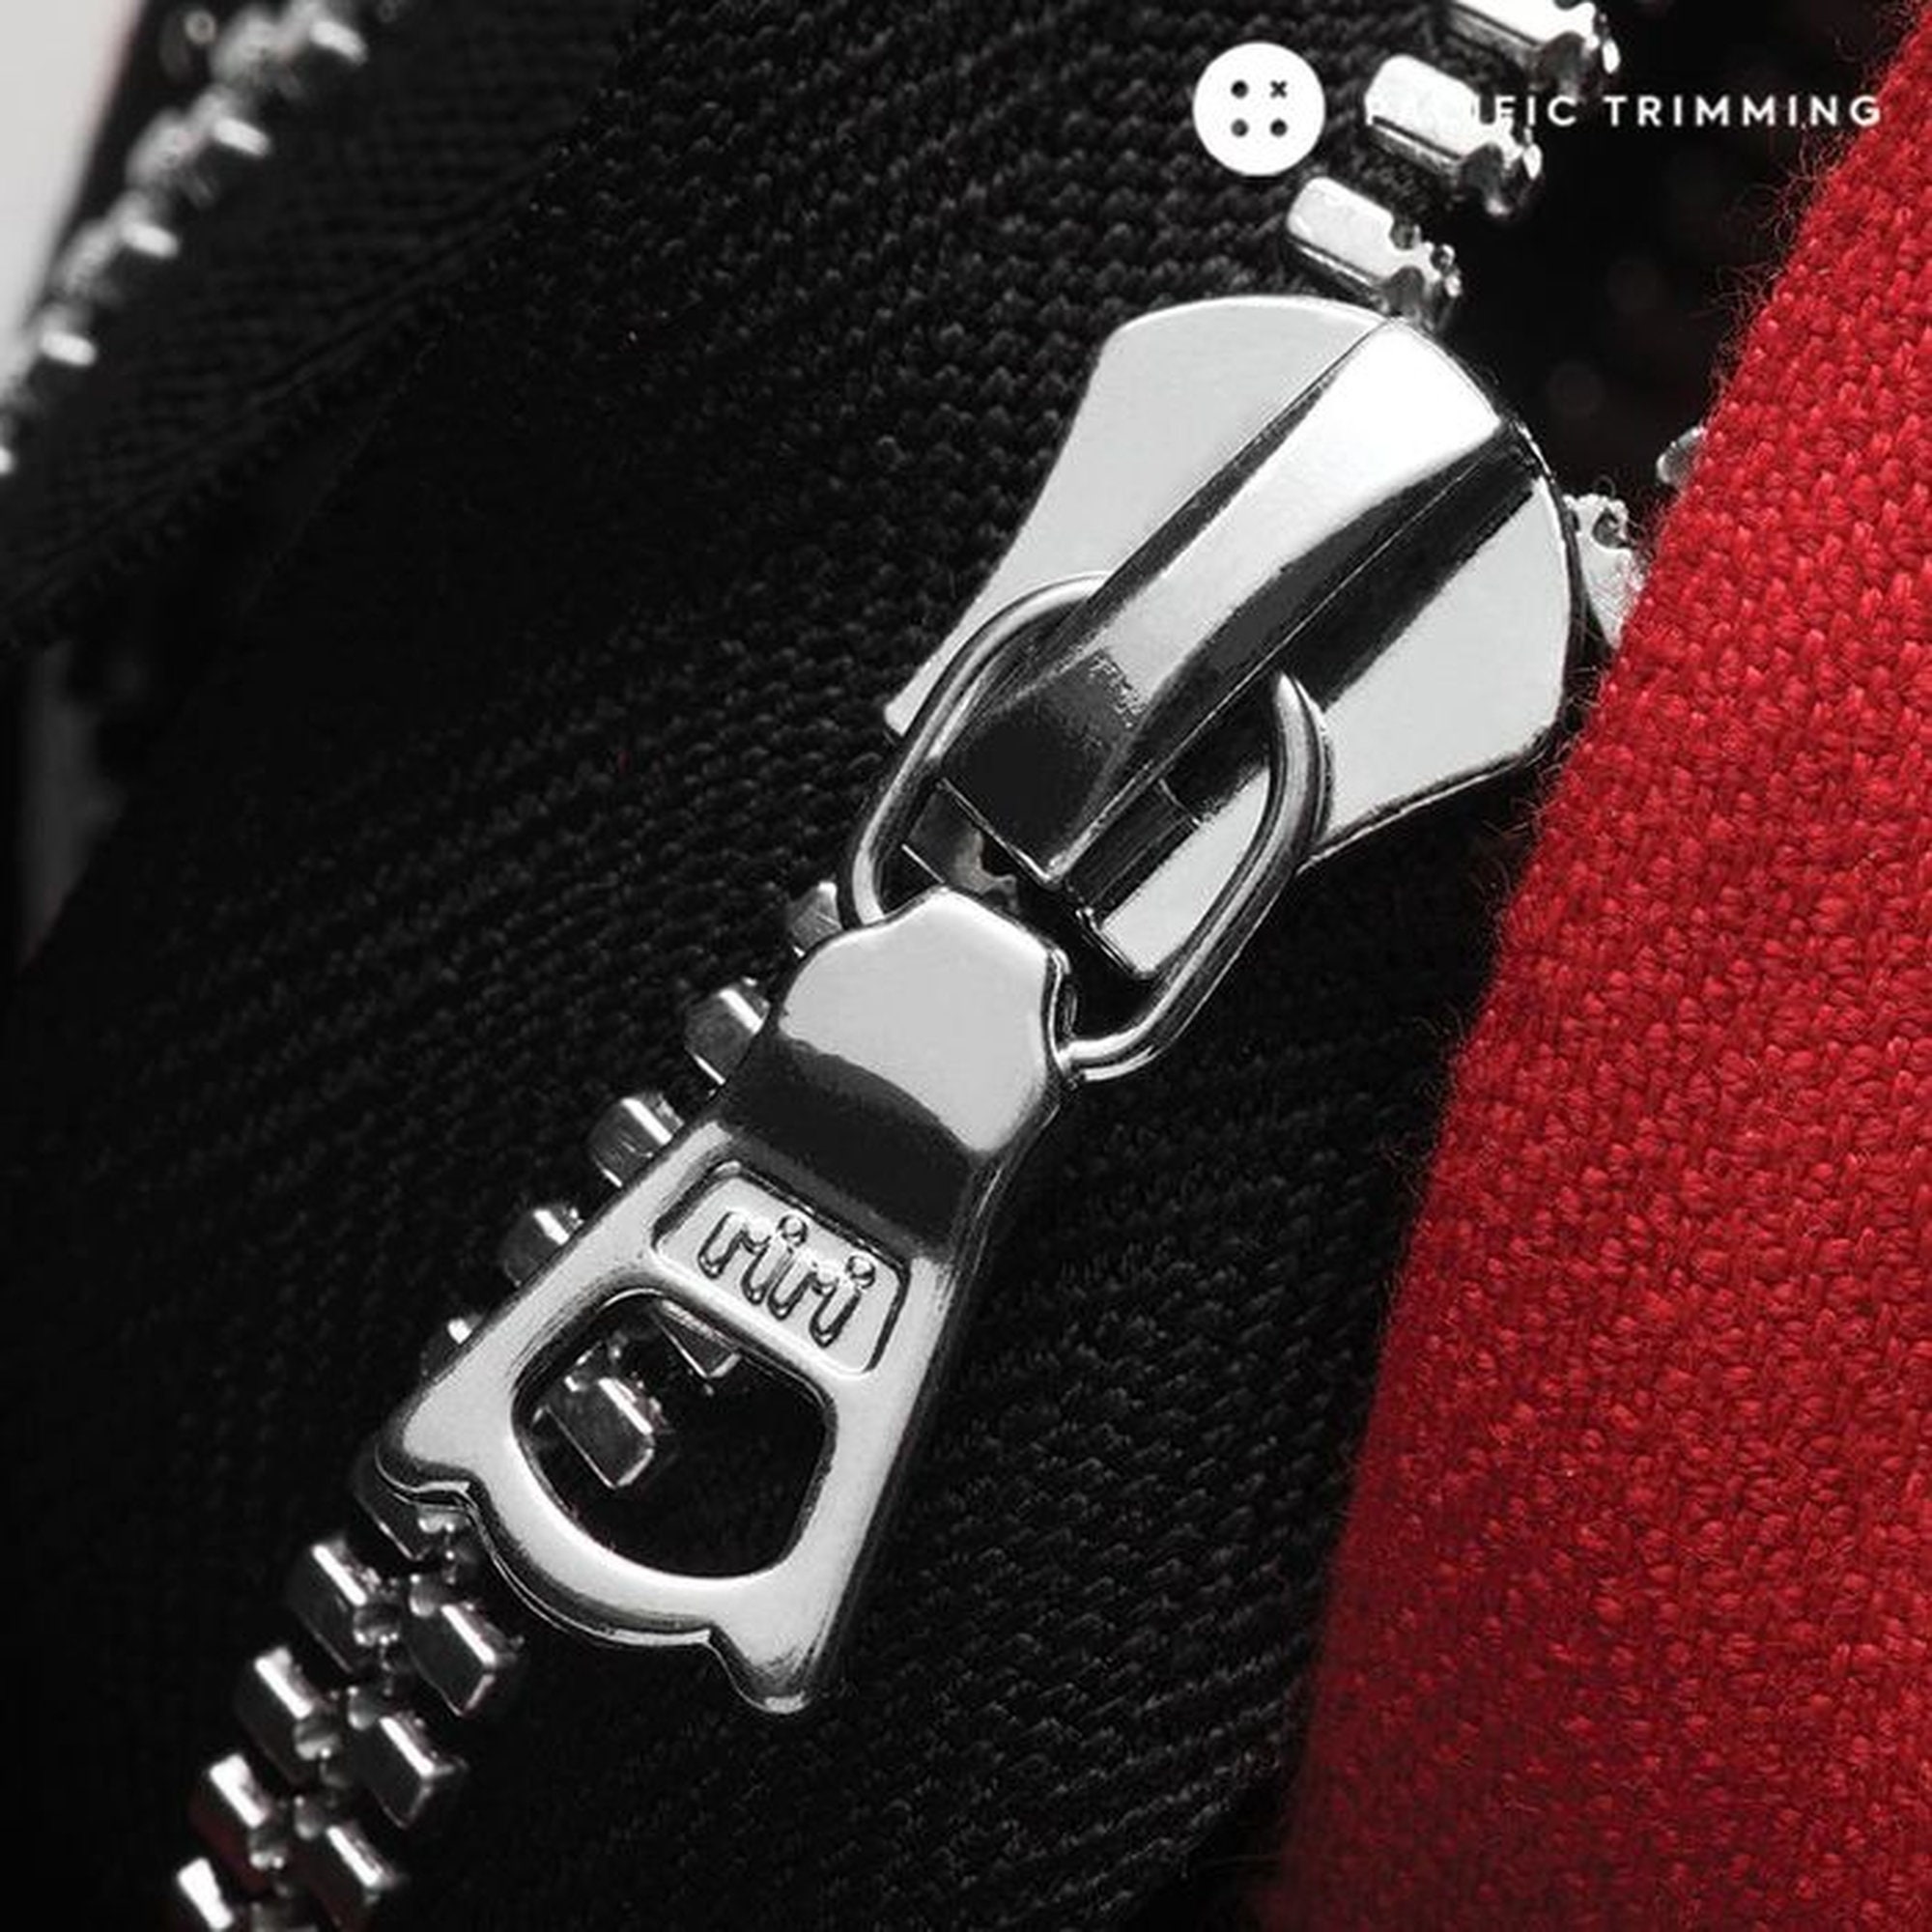 Dritz Fix-a-zipper for Plastic Zippers Gunmetal